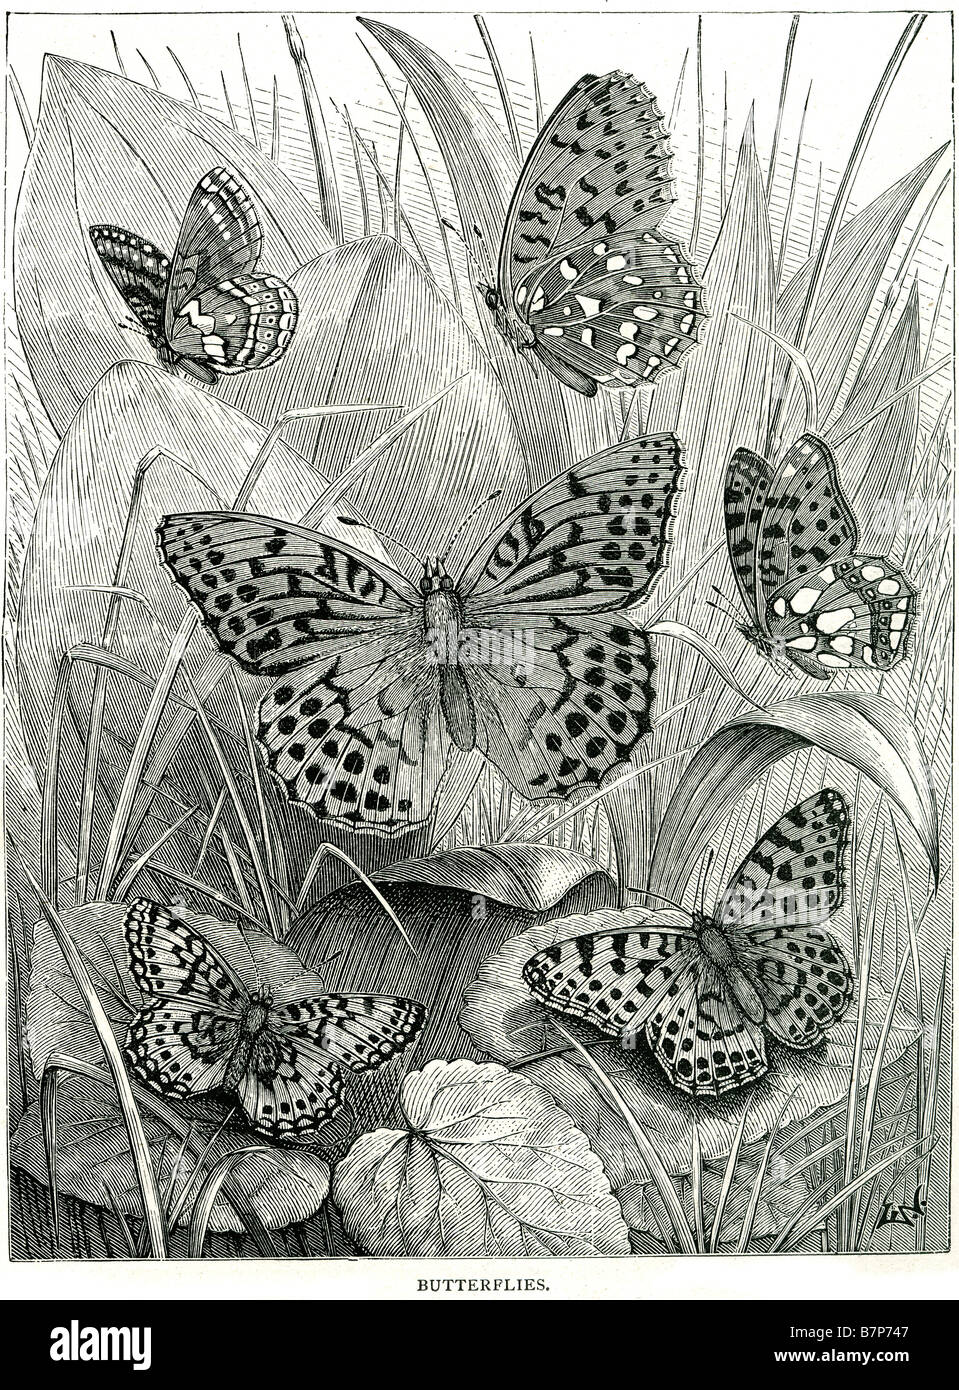 Butterflies Lepidoptera metamorphosis Egg Larva caterpillar Pupa chrysalis Adult butterfly imago Stock Photo